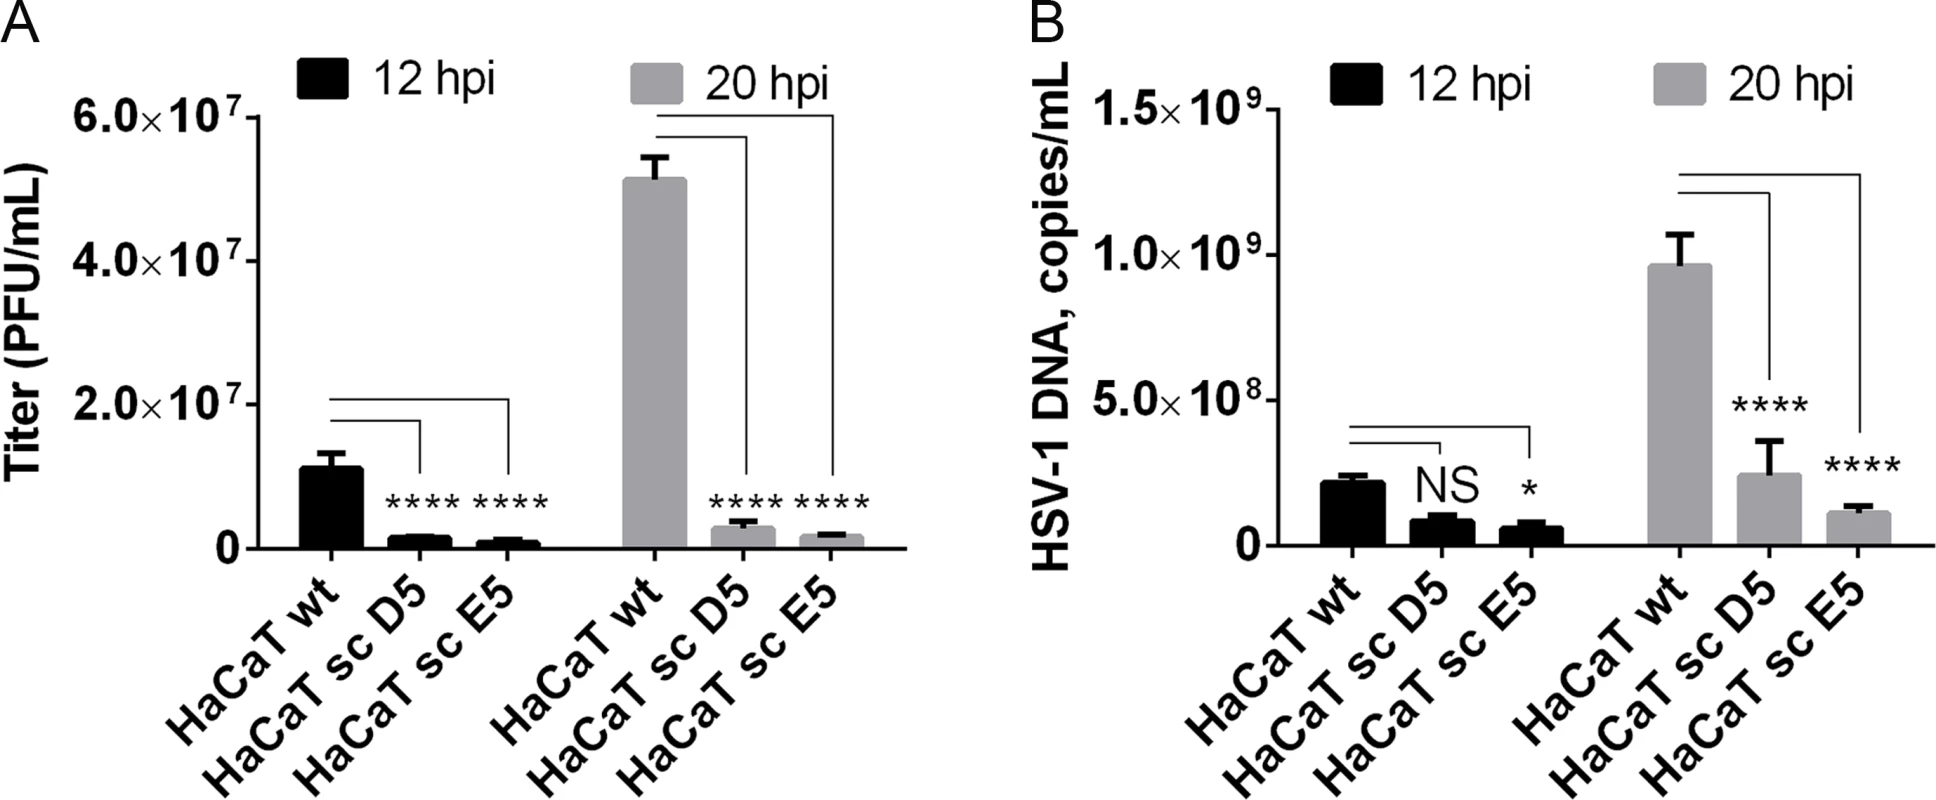 Elongation of O-linked glycans affects HSV-1 secretion/infectivity.